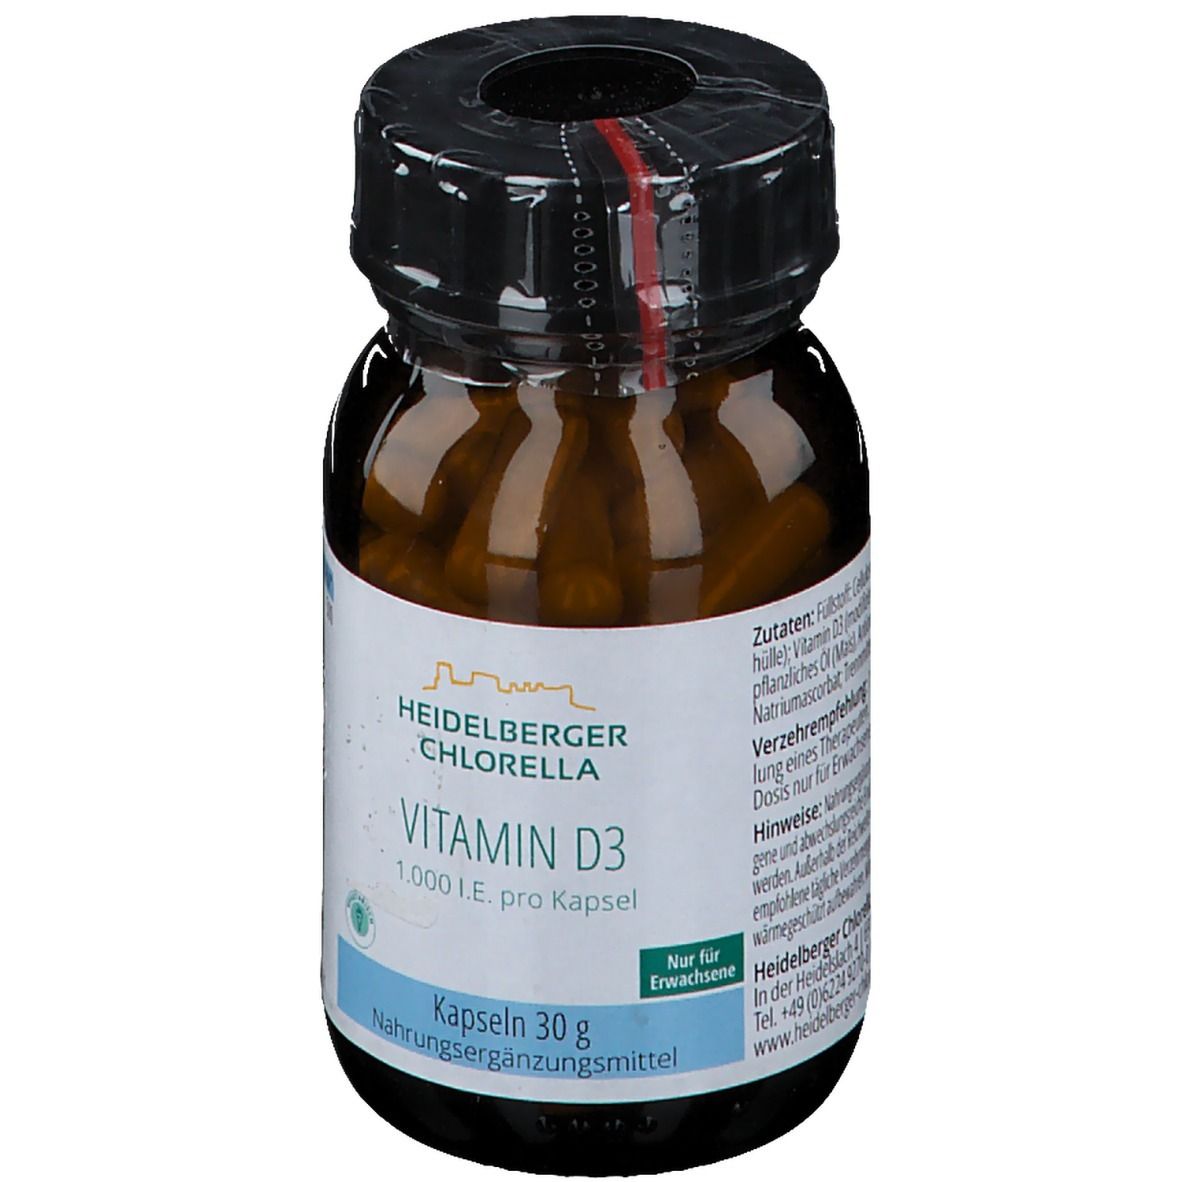 Heidelberger Chlorella® Vitamin D3 1.000 I.E